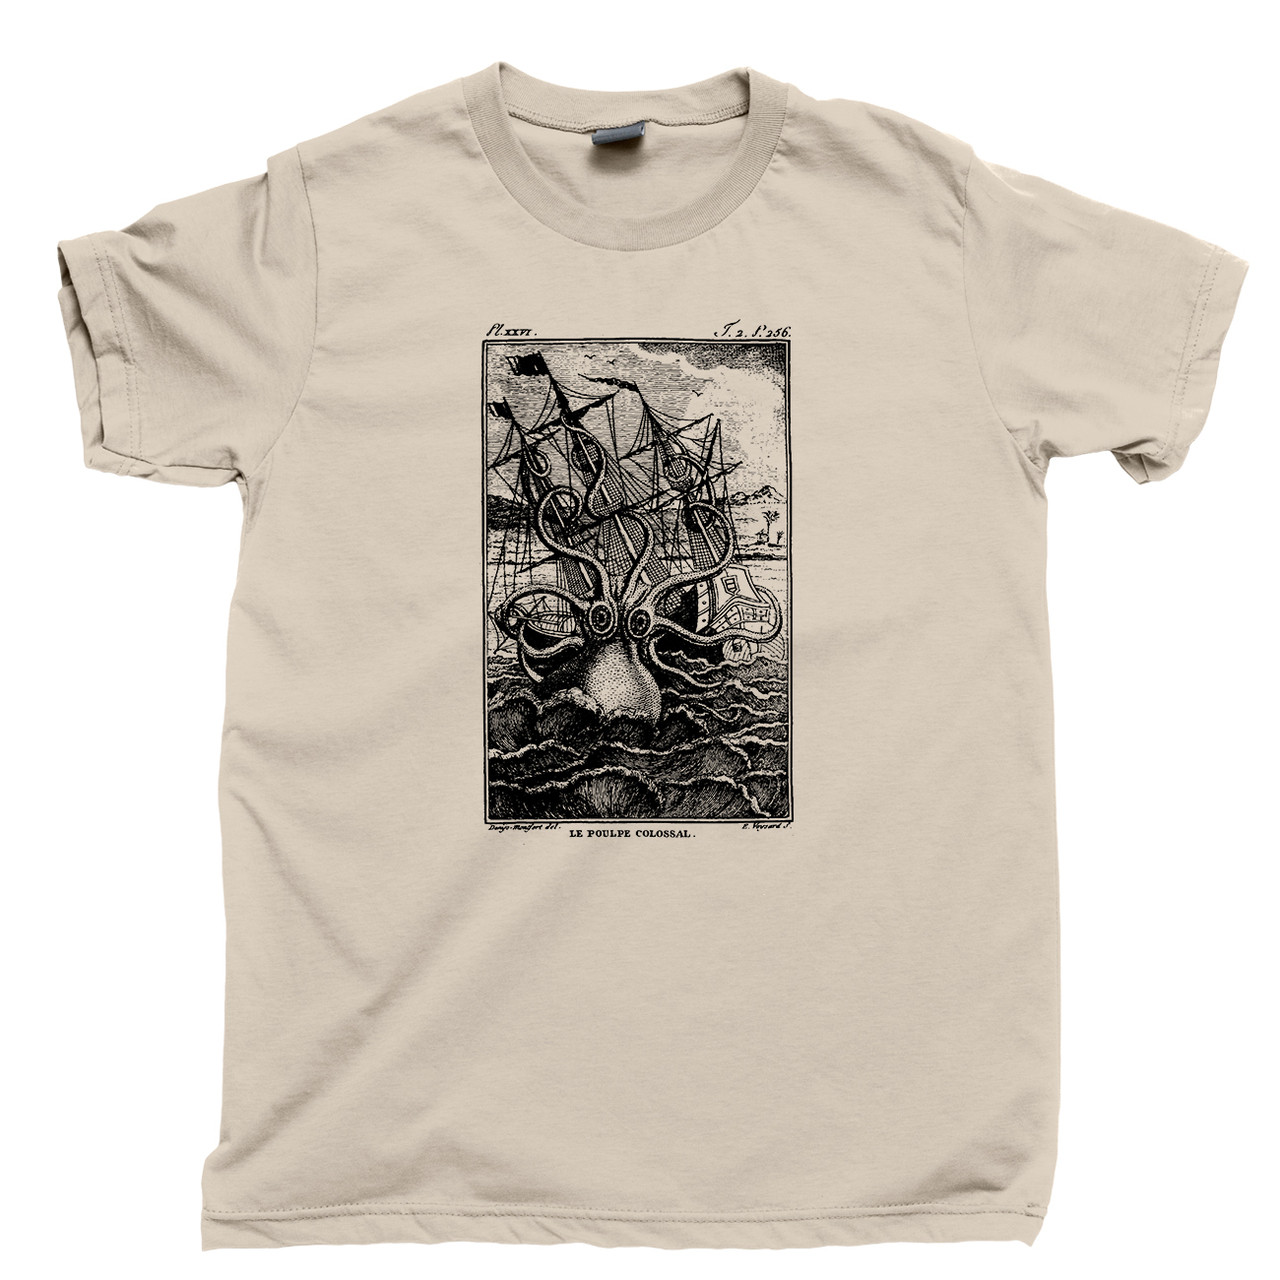 All Sizes Kraken Attacking Ship The Mountain T-Shirt 3658 